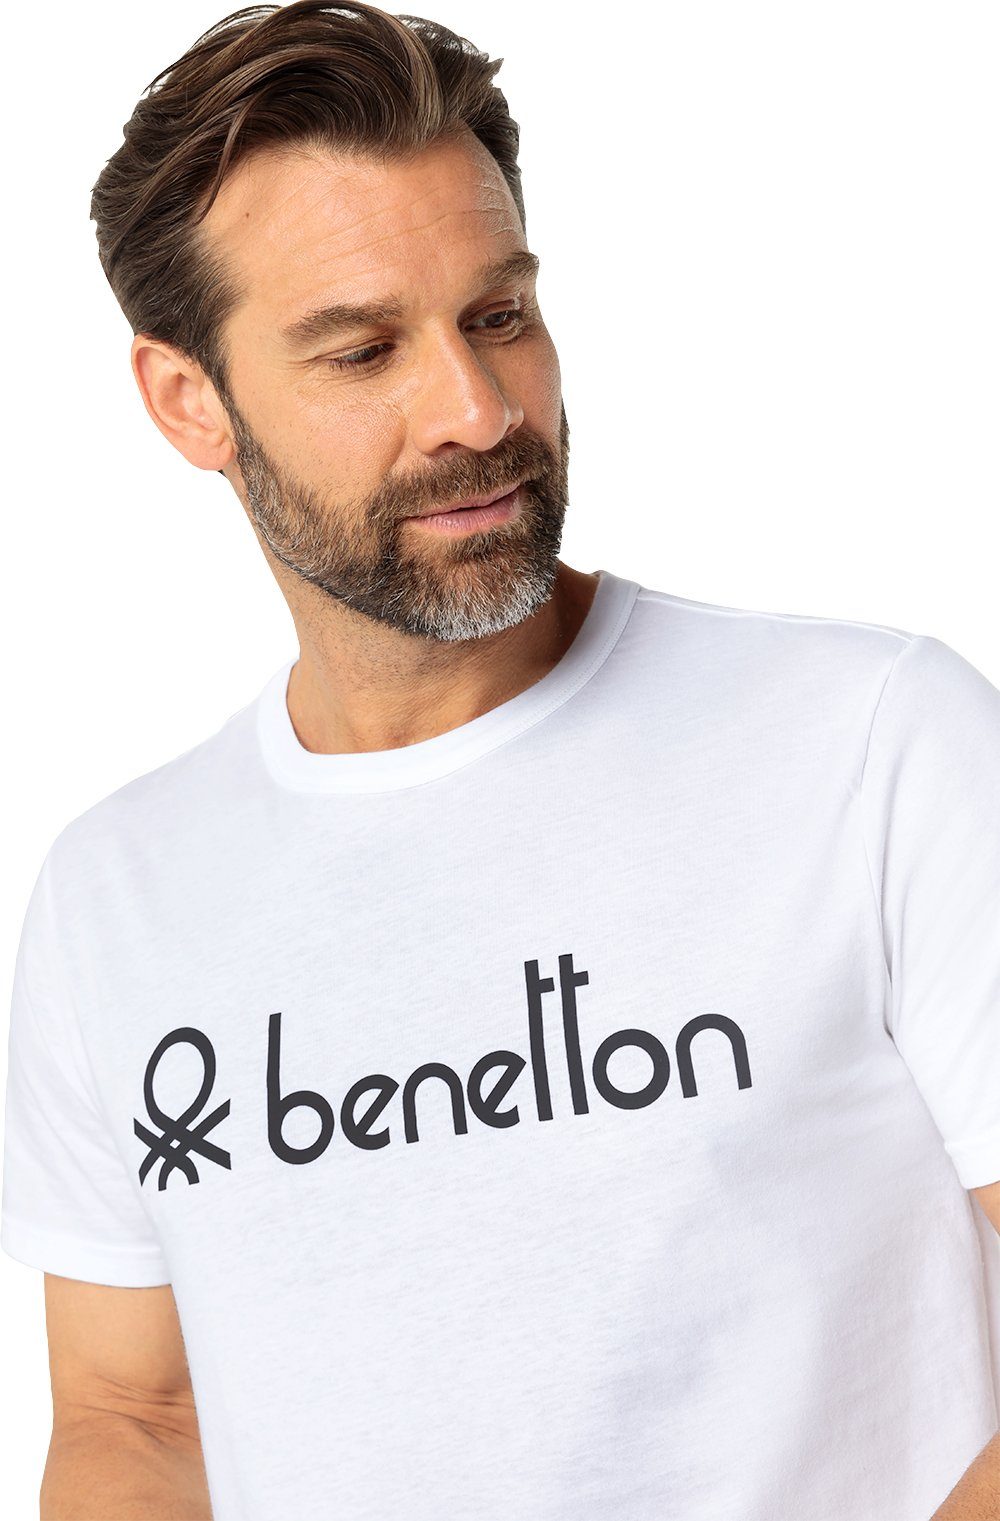 T-Shirt United Baumwolle weiß Colors aus Benetton of